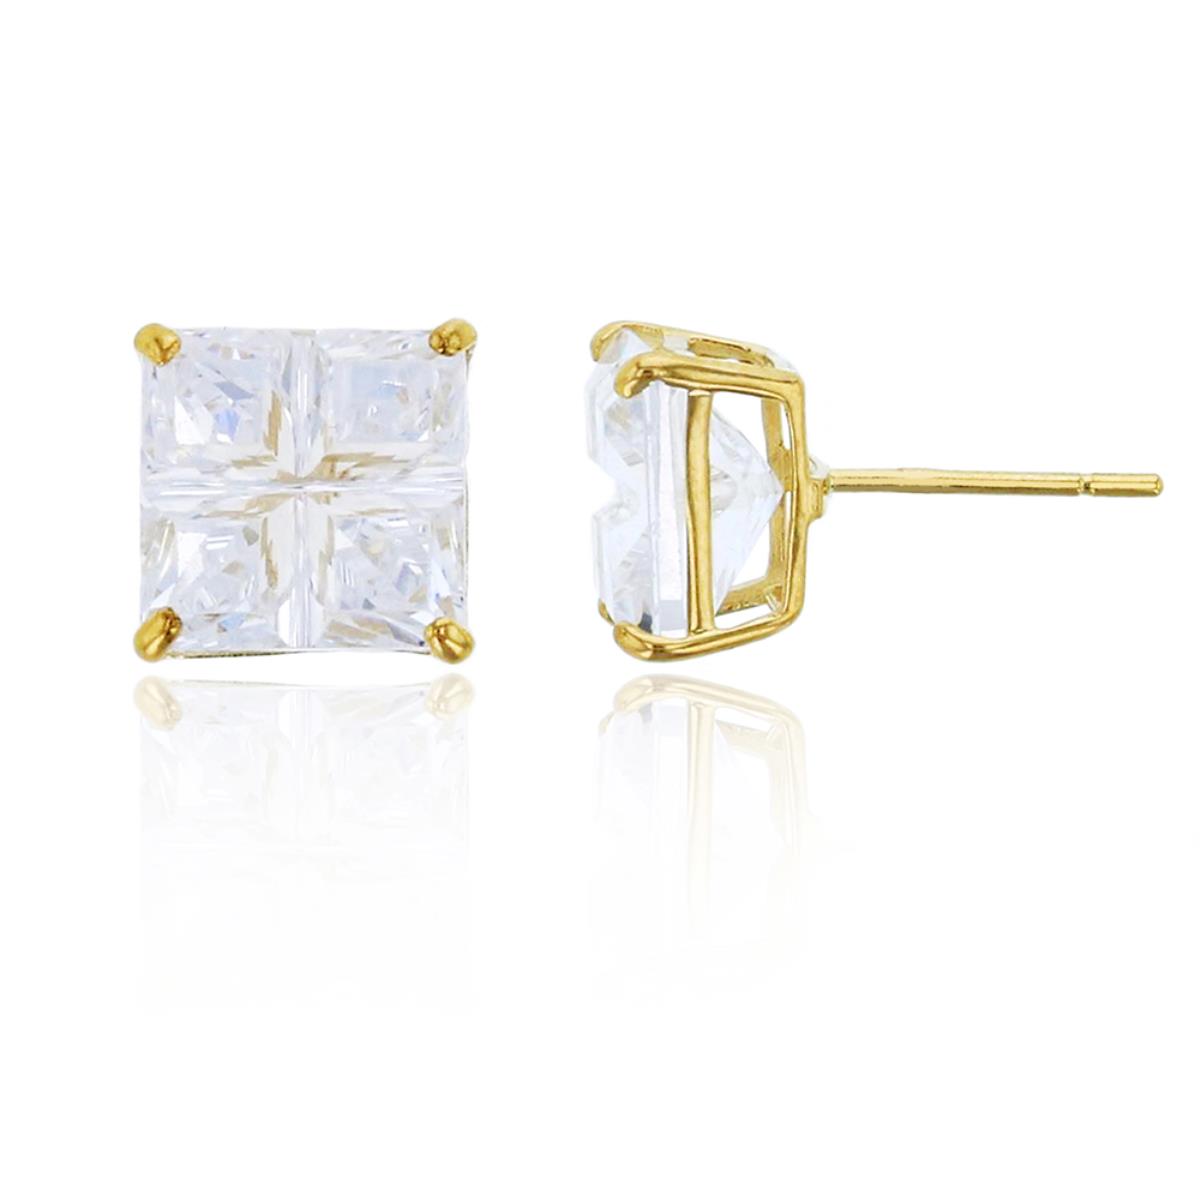 14K Yellow Gold 4mm 4-Segment Square CZ Basket Stud Earring